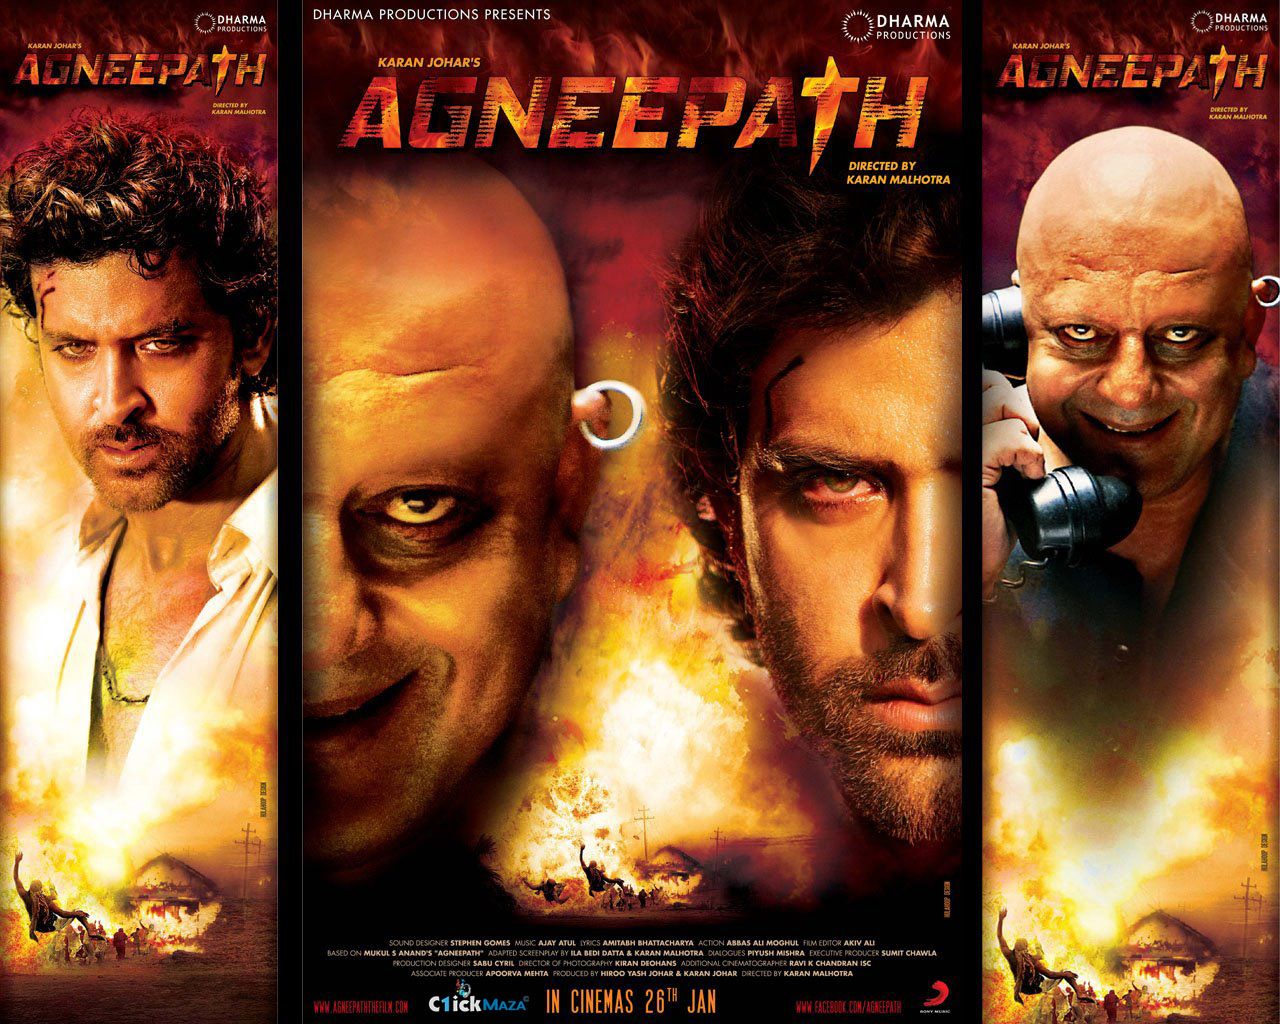 Latest News: Agneepath 2012 Latest Hindi movie Wallpaper, Image, Story, Picture, Star cast, Hritik roshan, Katrina kaif, Sunjay dutt, Priyanka chopra, Rishi kapoor